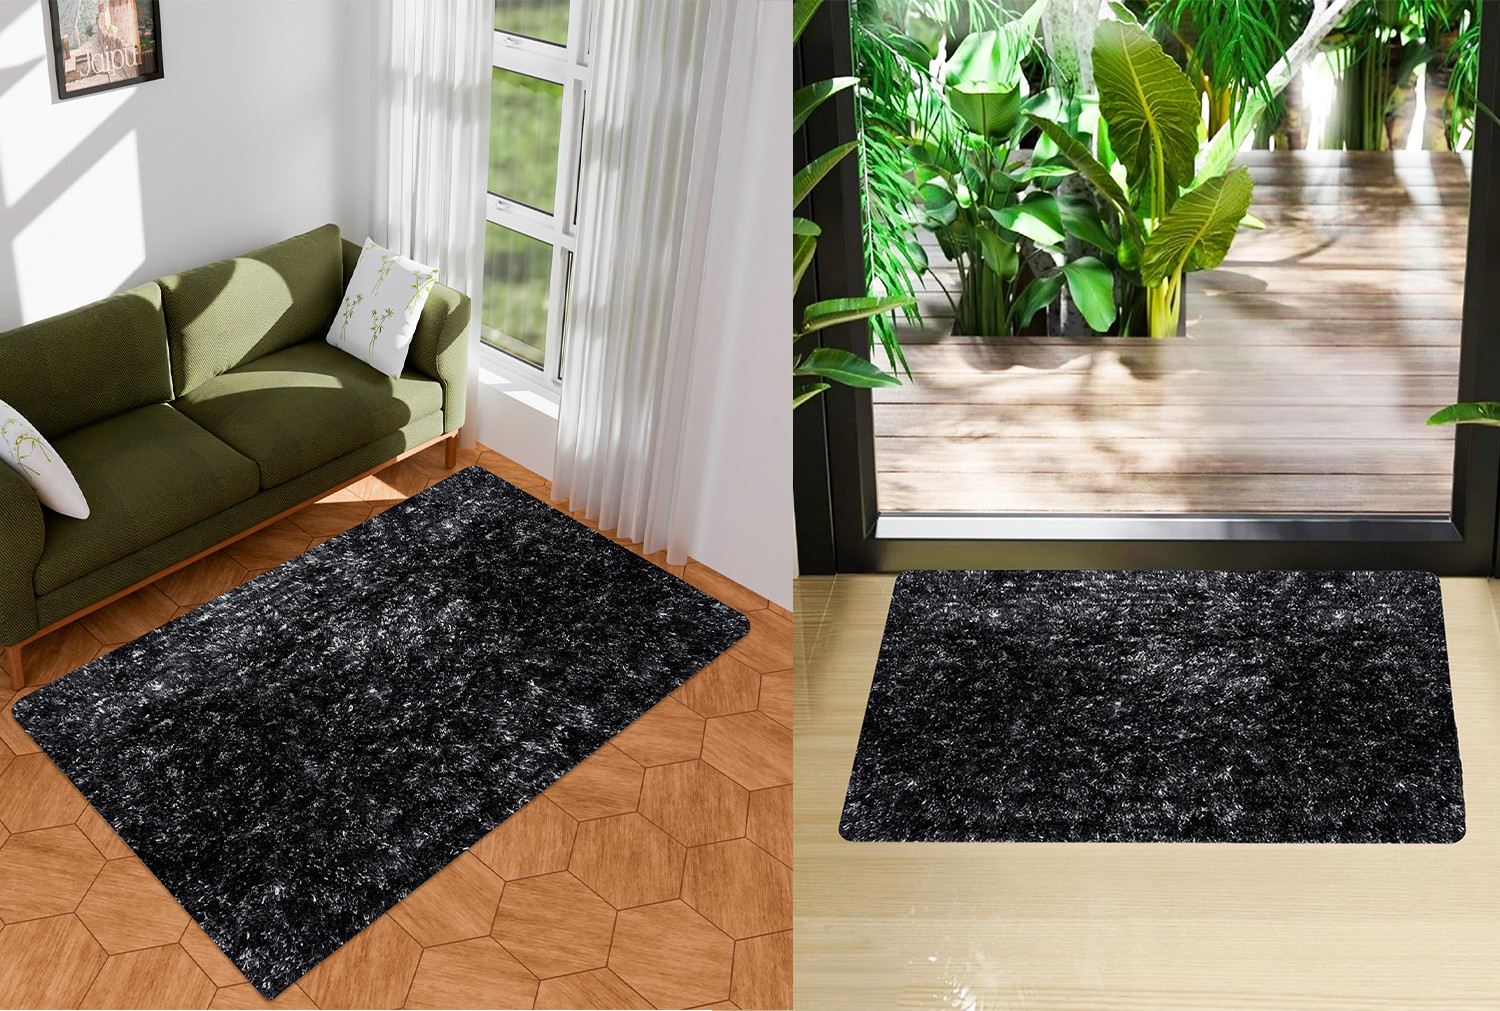 Kuber Industries Carpet | Shaggy Carpet for Living Room | Fluffy Door Mat | Lexus Home Decor Carpet & Door Mat Combo | Floor Carpet Rug & Door Mat Set | Set of 2 | Gray